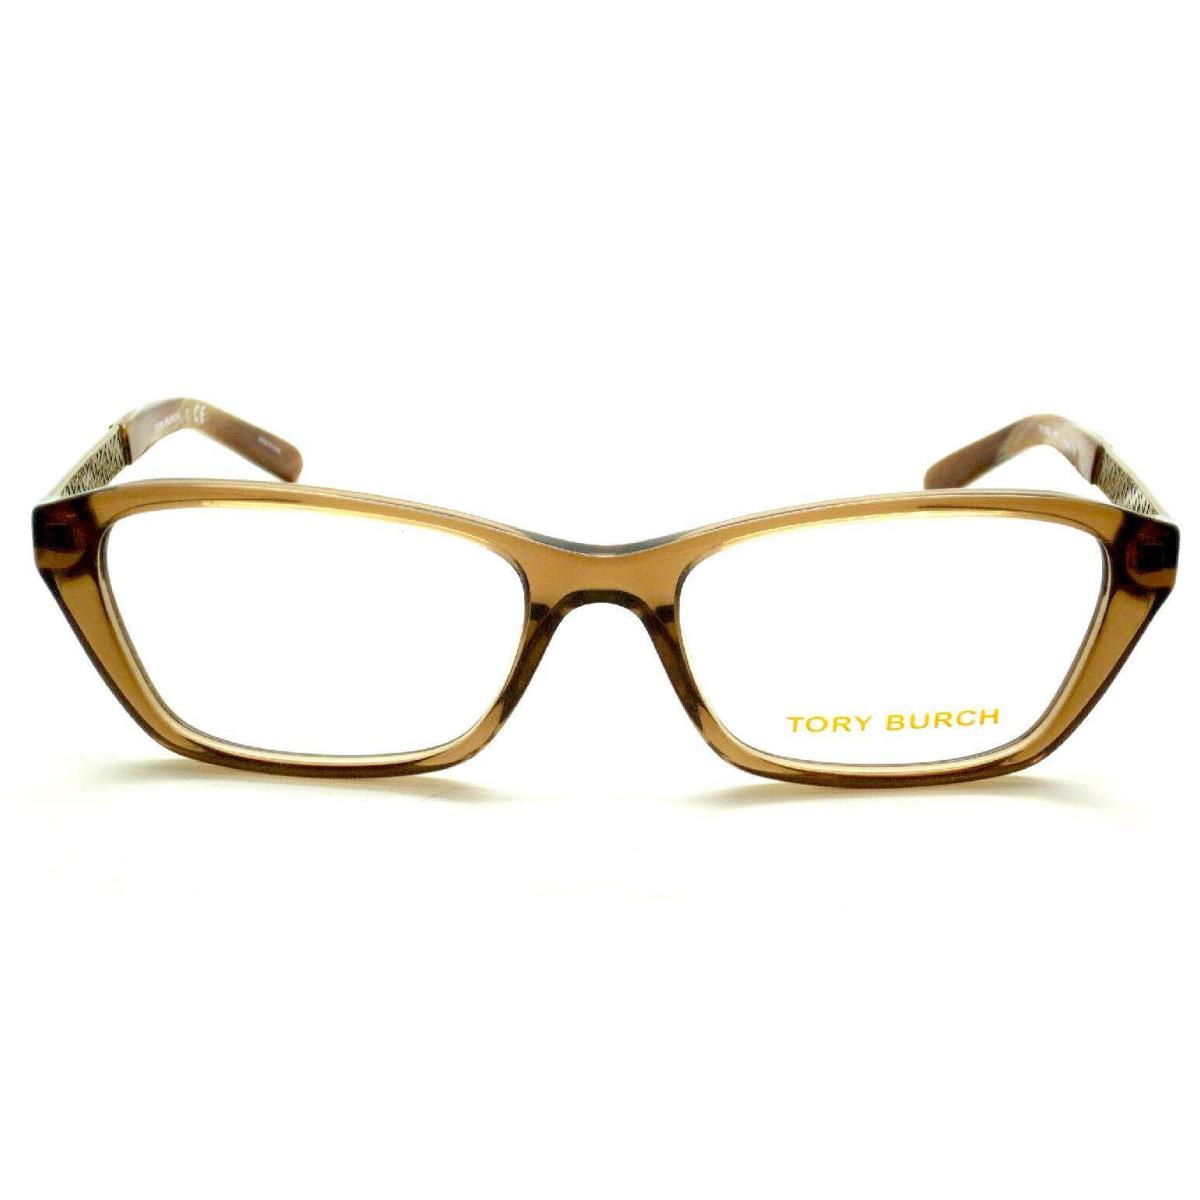 Tory Burch TY 2058 1517 Brown Clear Eyeglasses RX 51-16-135